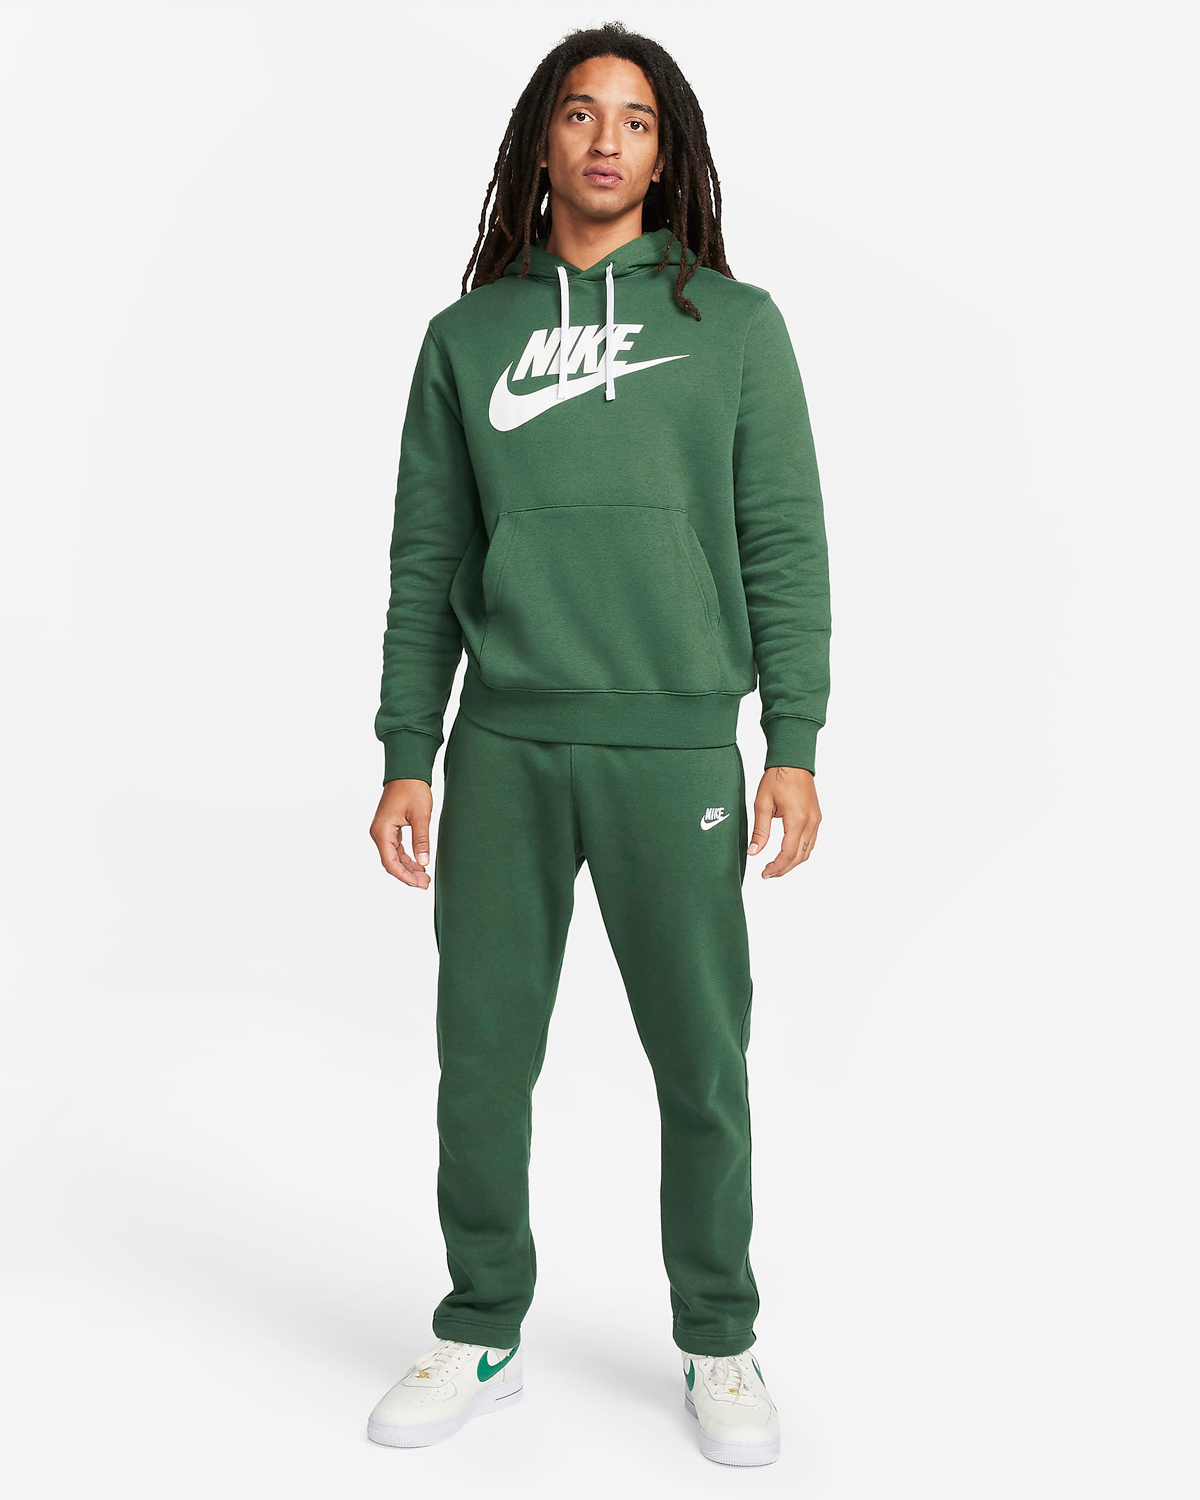 Nike-Sportswear-Club-Fleece-Graphic-Hoodie-Fir-Green-Outfit